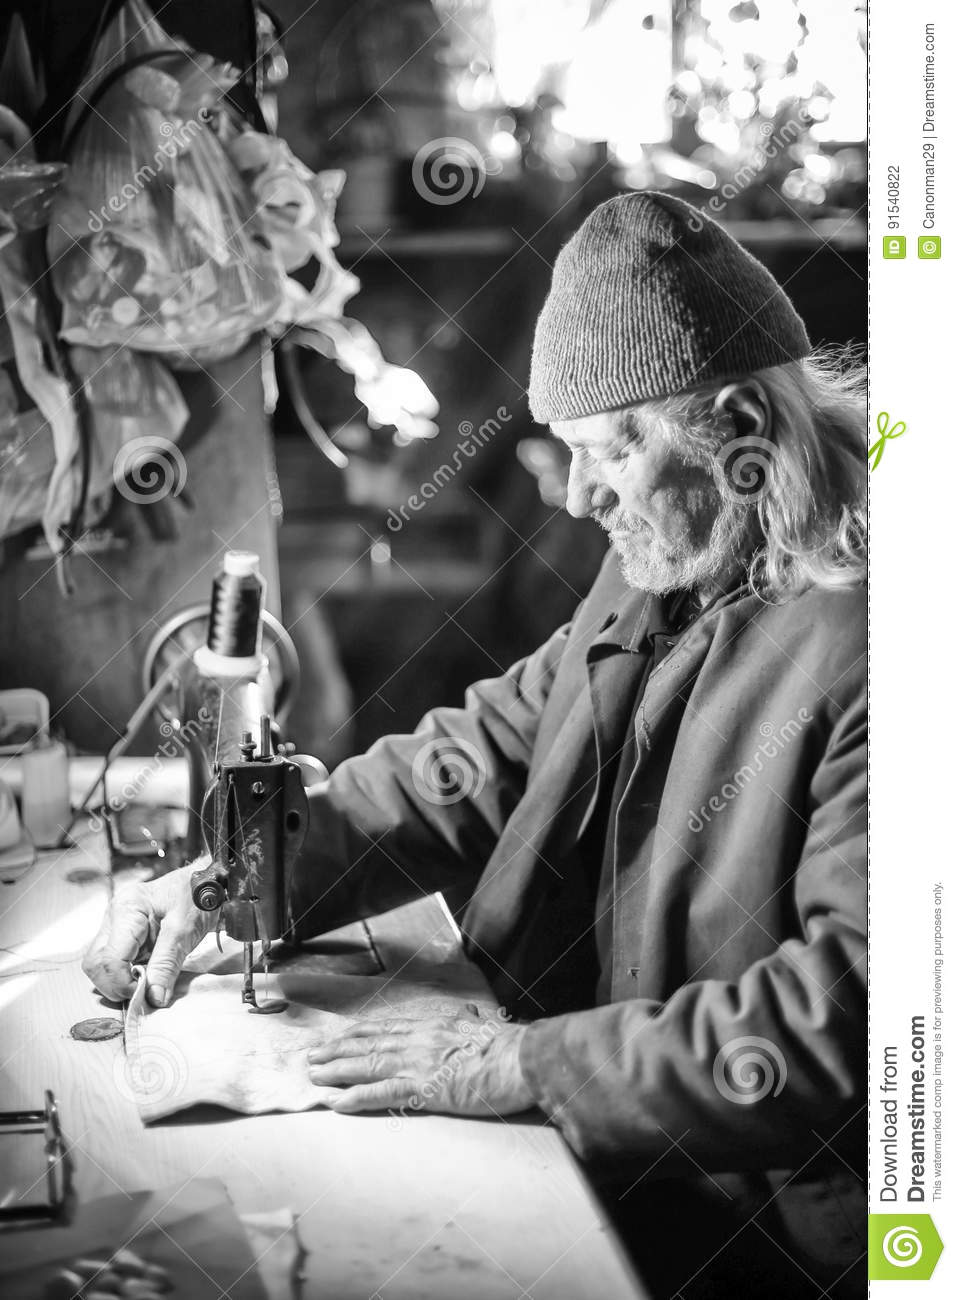 old-man-sewing-bw-senior-adult-piece-cloth-machine-91540822.jpg